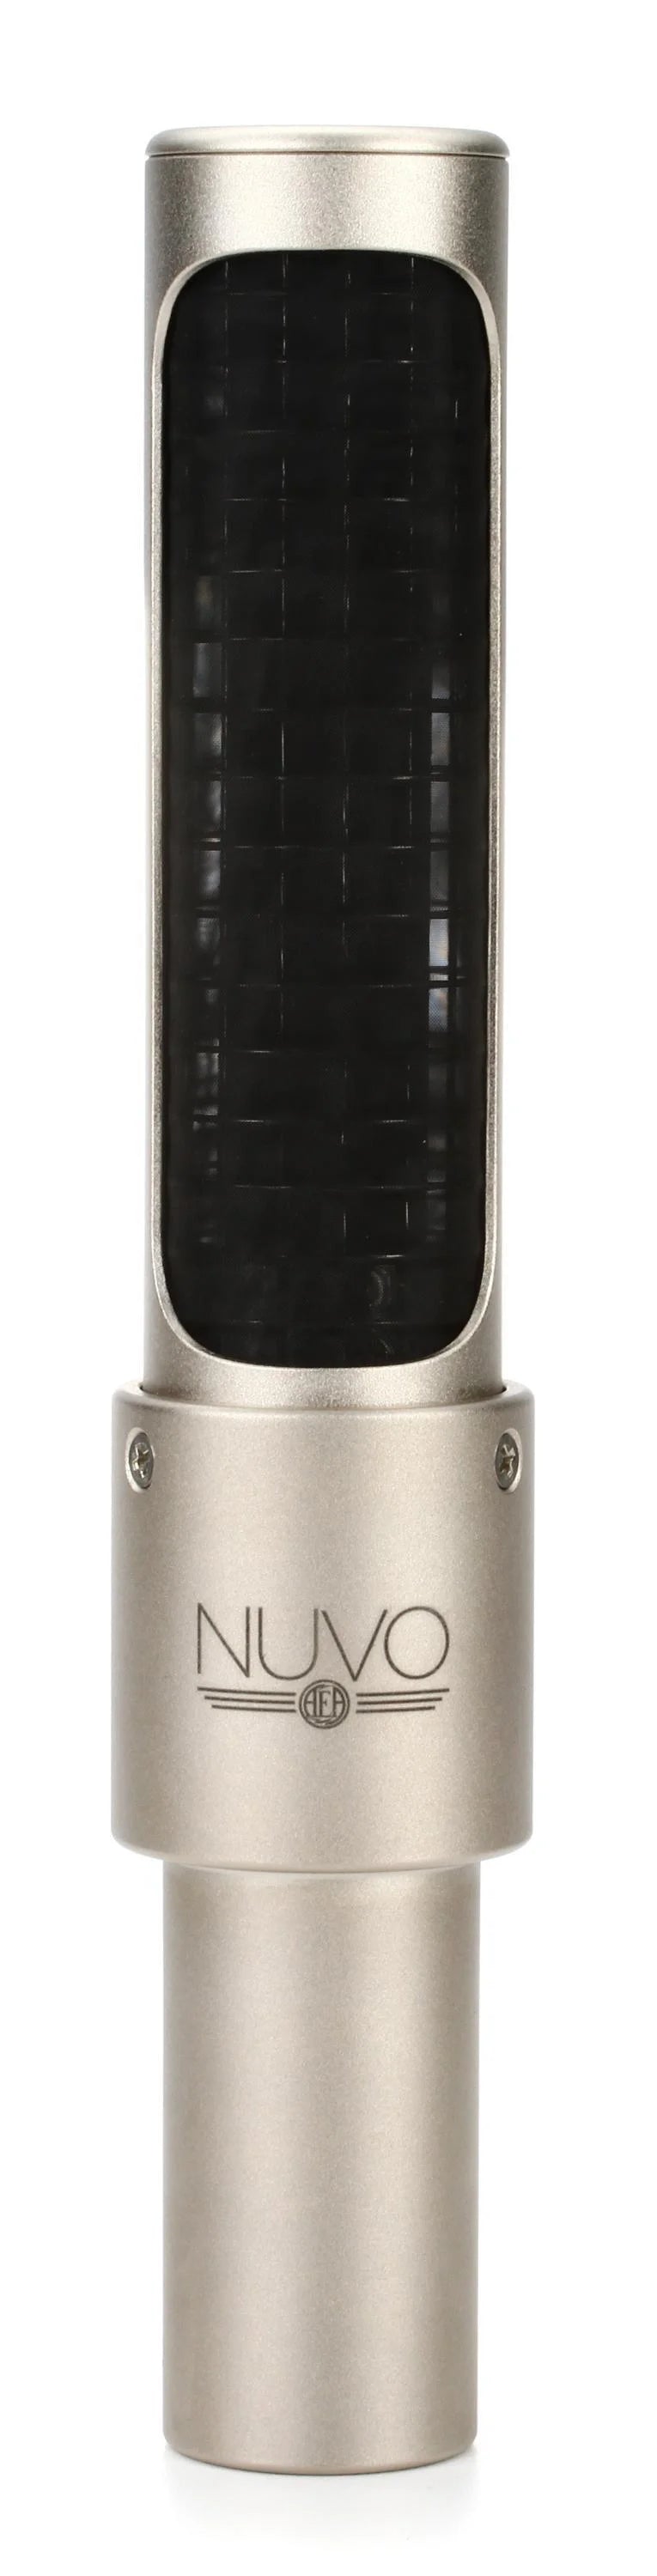 AEA N22 NUVO Near-Field Microphone